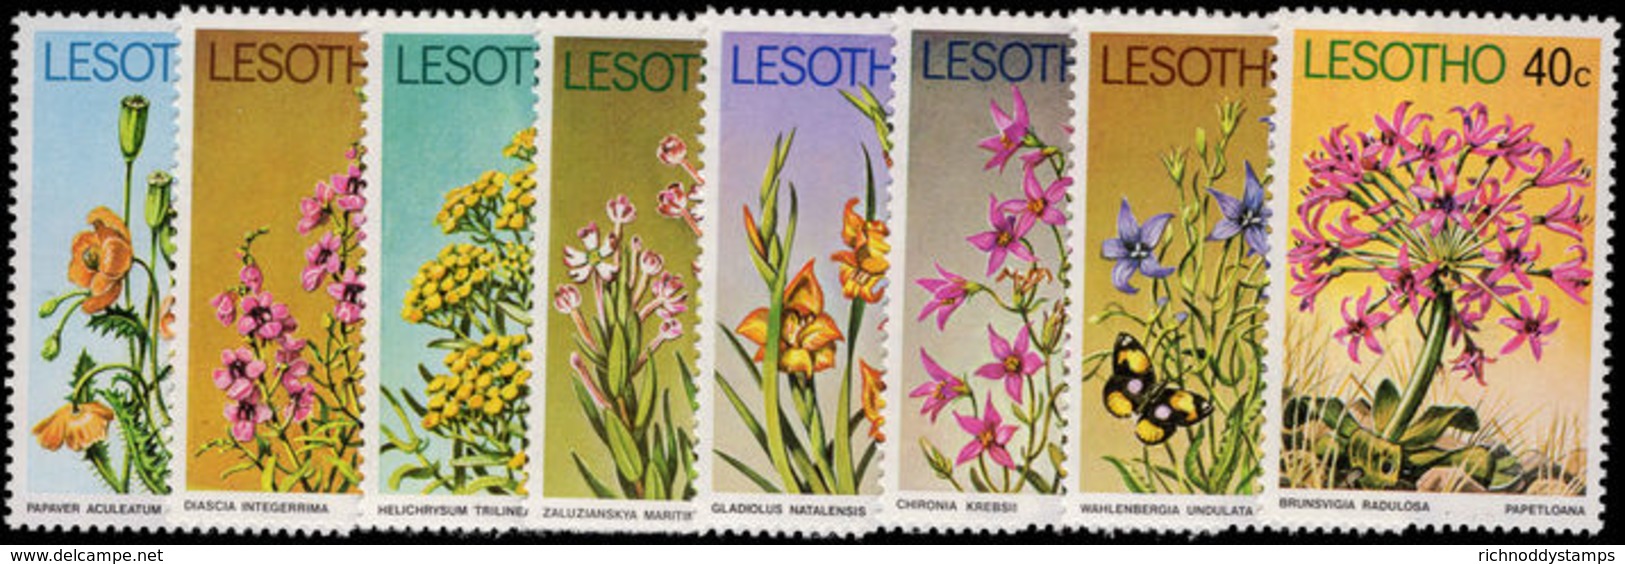 Lesotho 1978 Flowers Unmounted Mint. - Lesotho (1966-...)